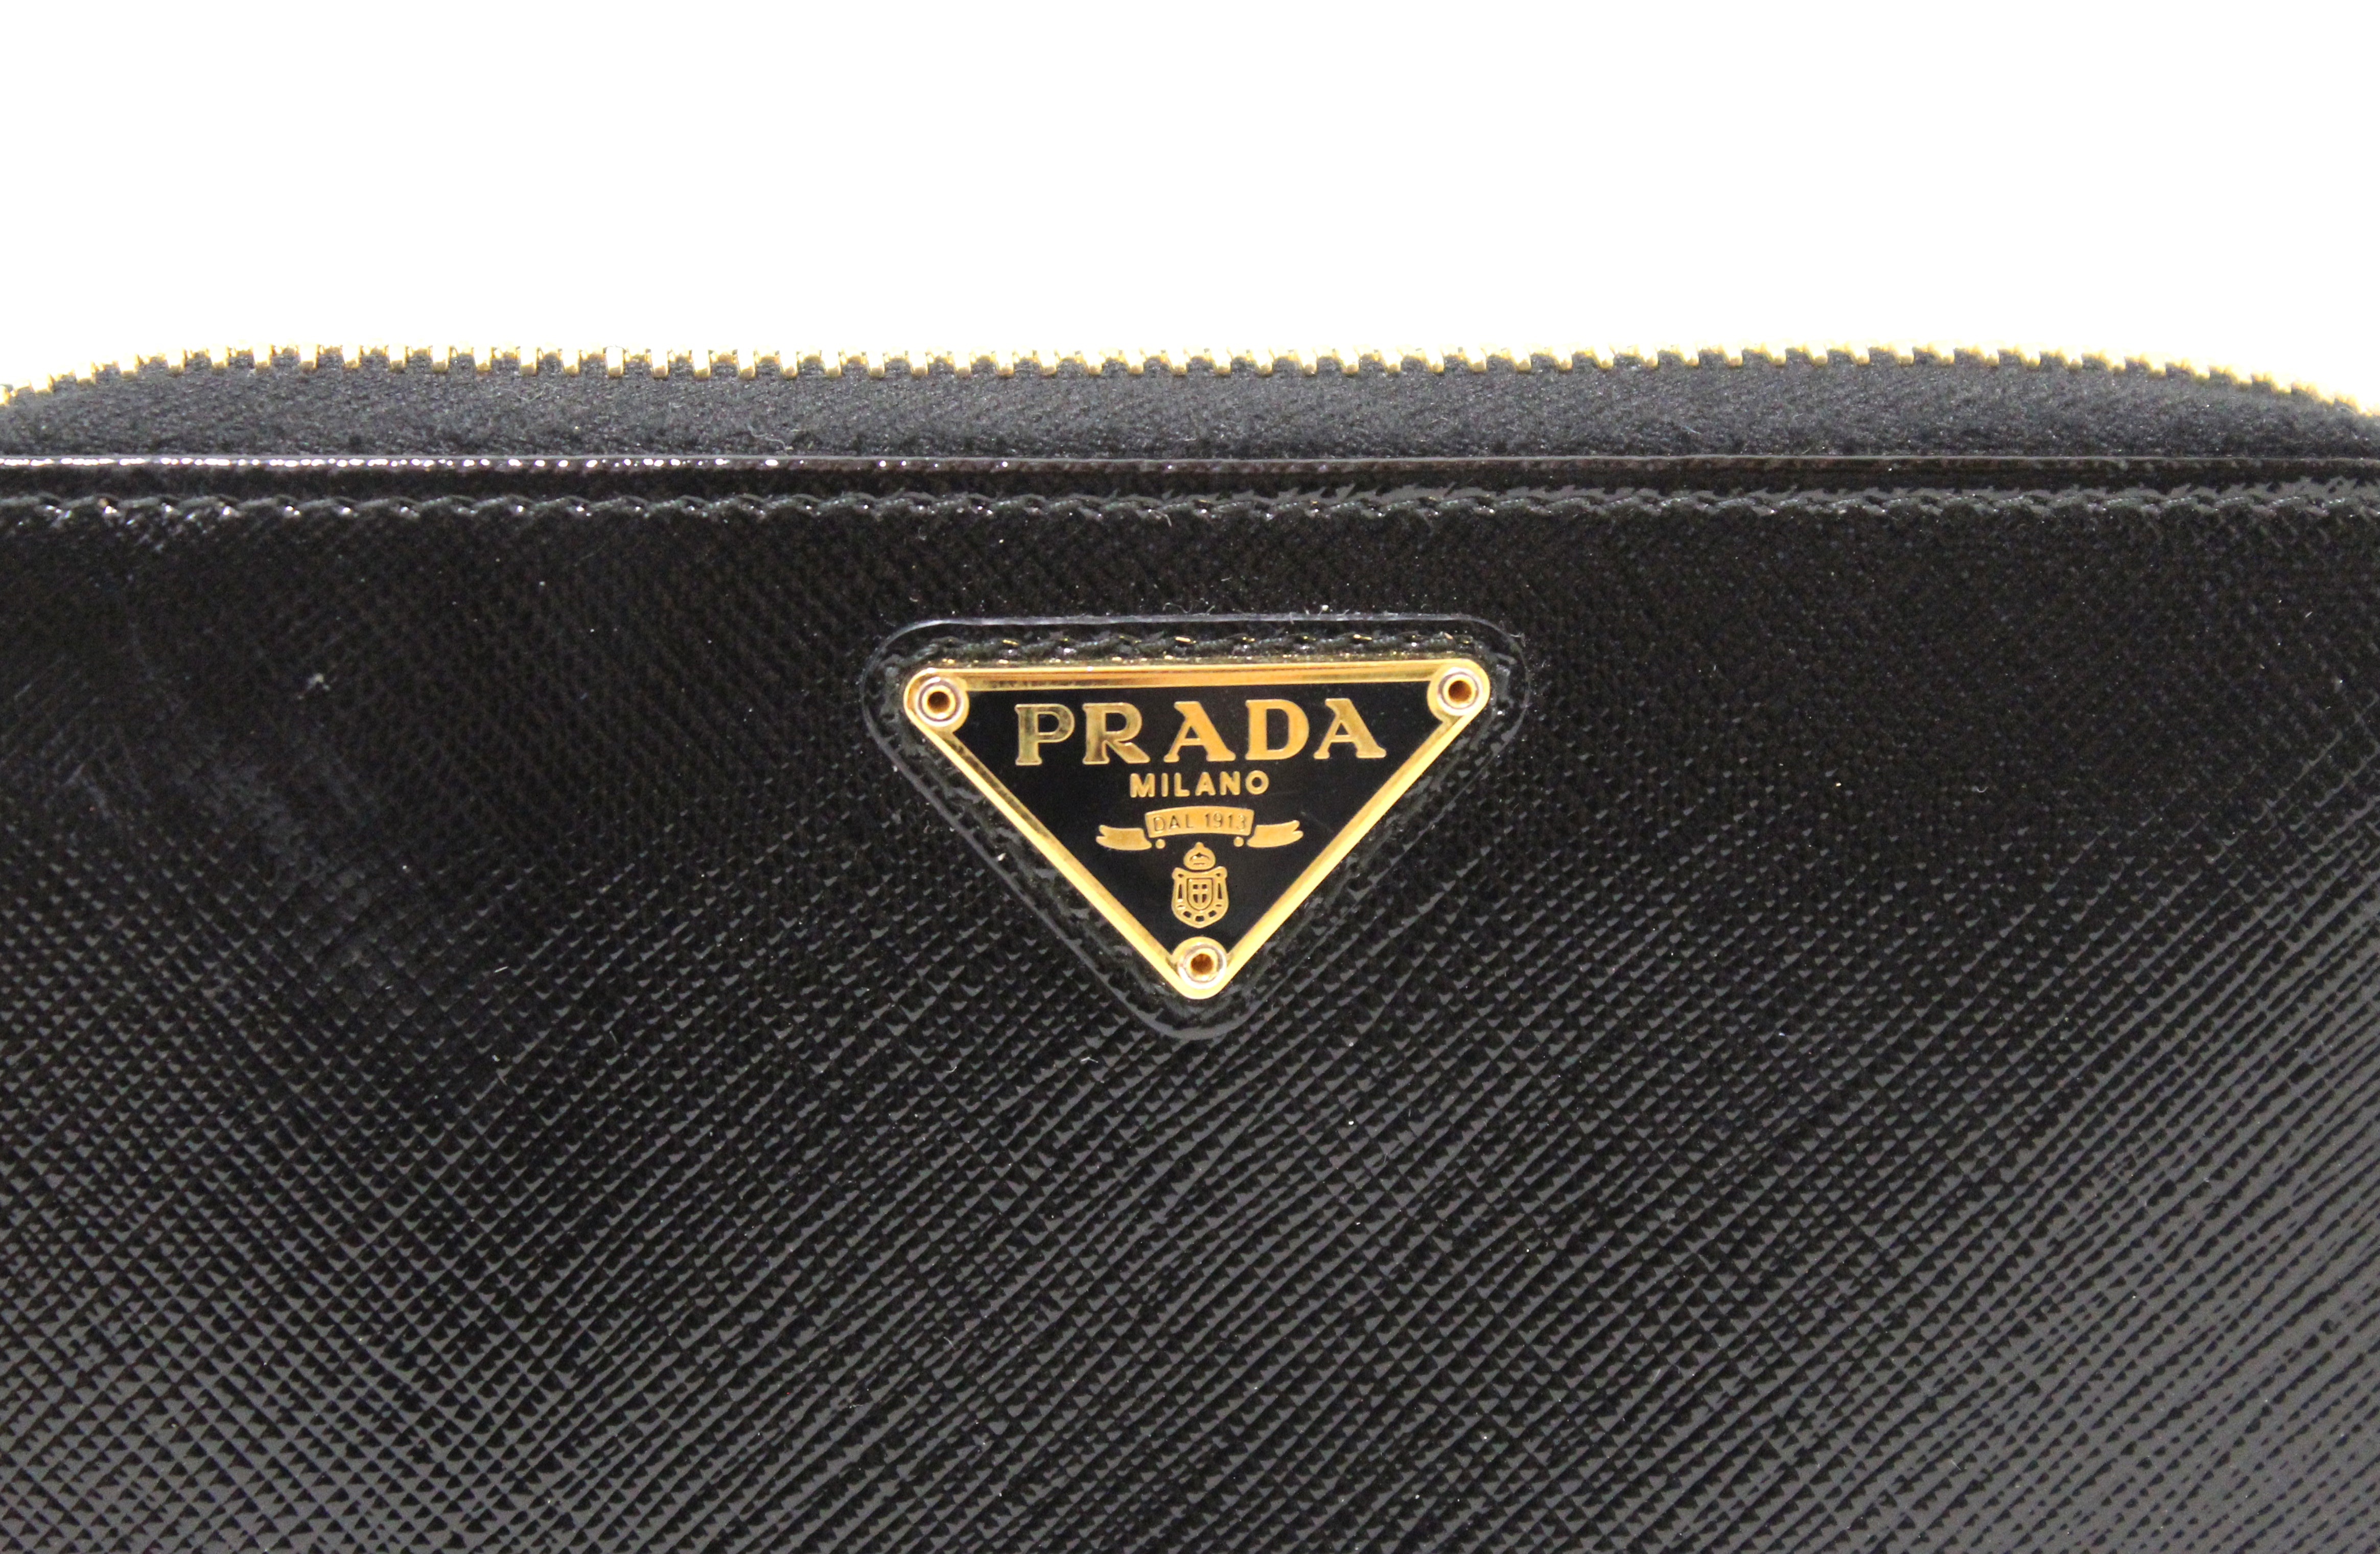 PRADA: wallet in saffiano leather - Black  Prada wallet 2MO004 QHH online  at